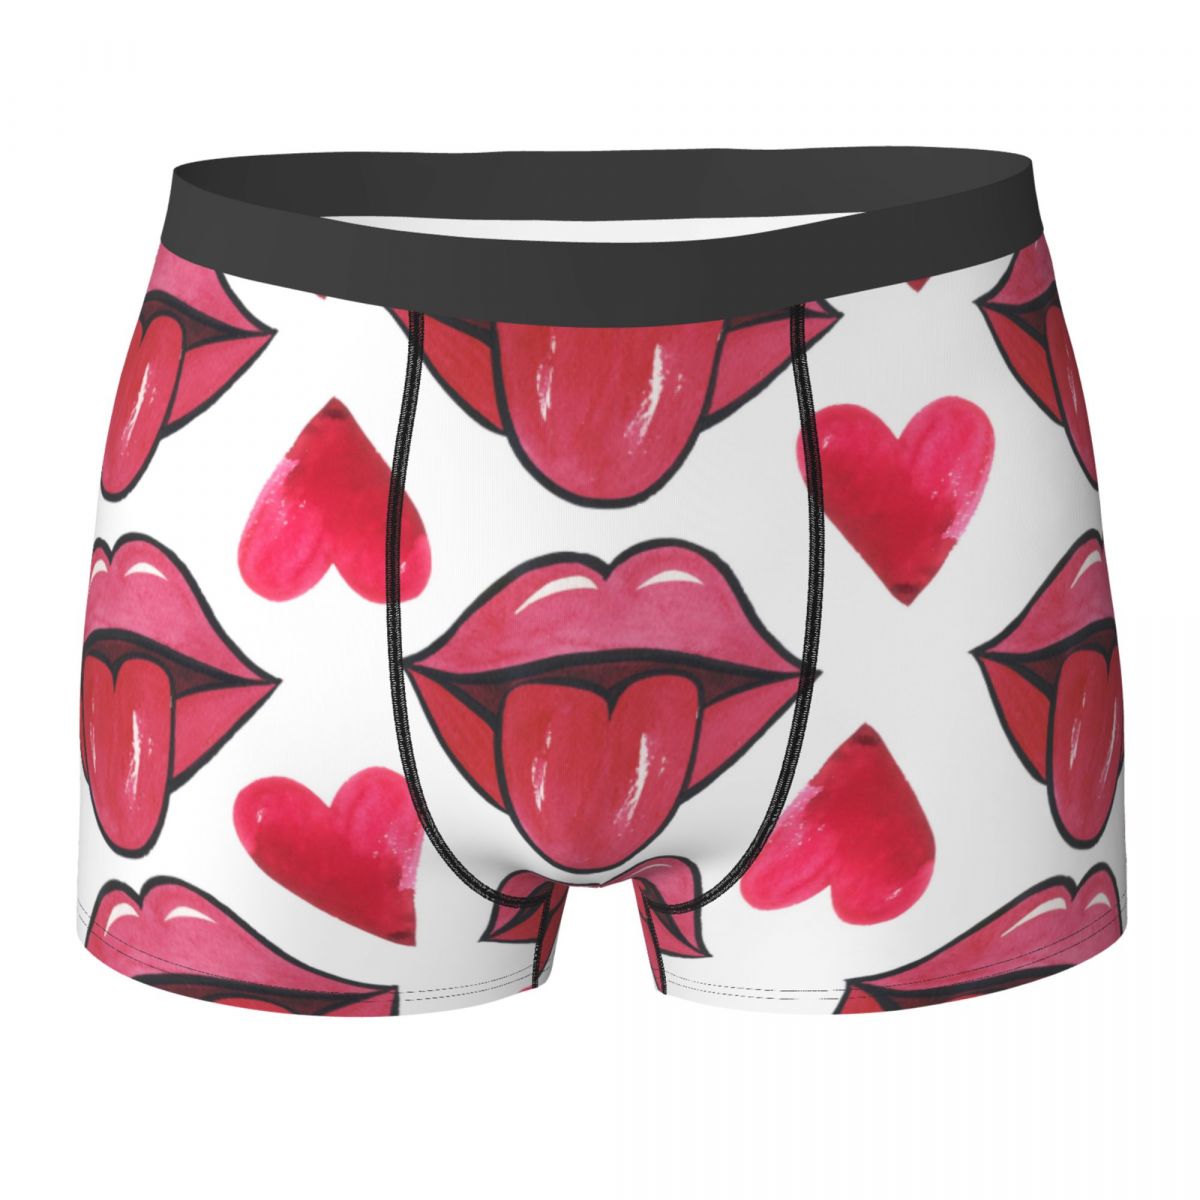 Red Lips and Heart Man Underwear Boxer Briefs Shorts Plantures drôles Sous-pants respirants pour S-XXL masculin